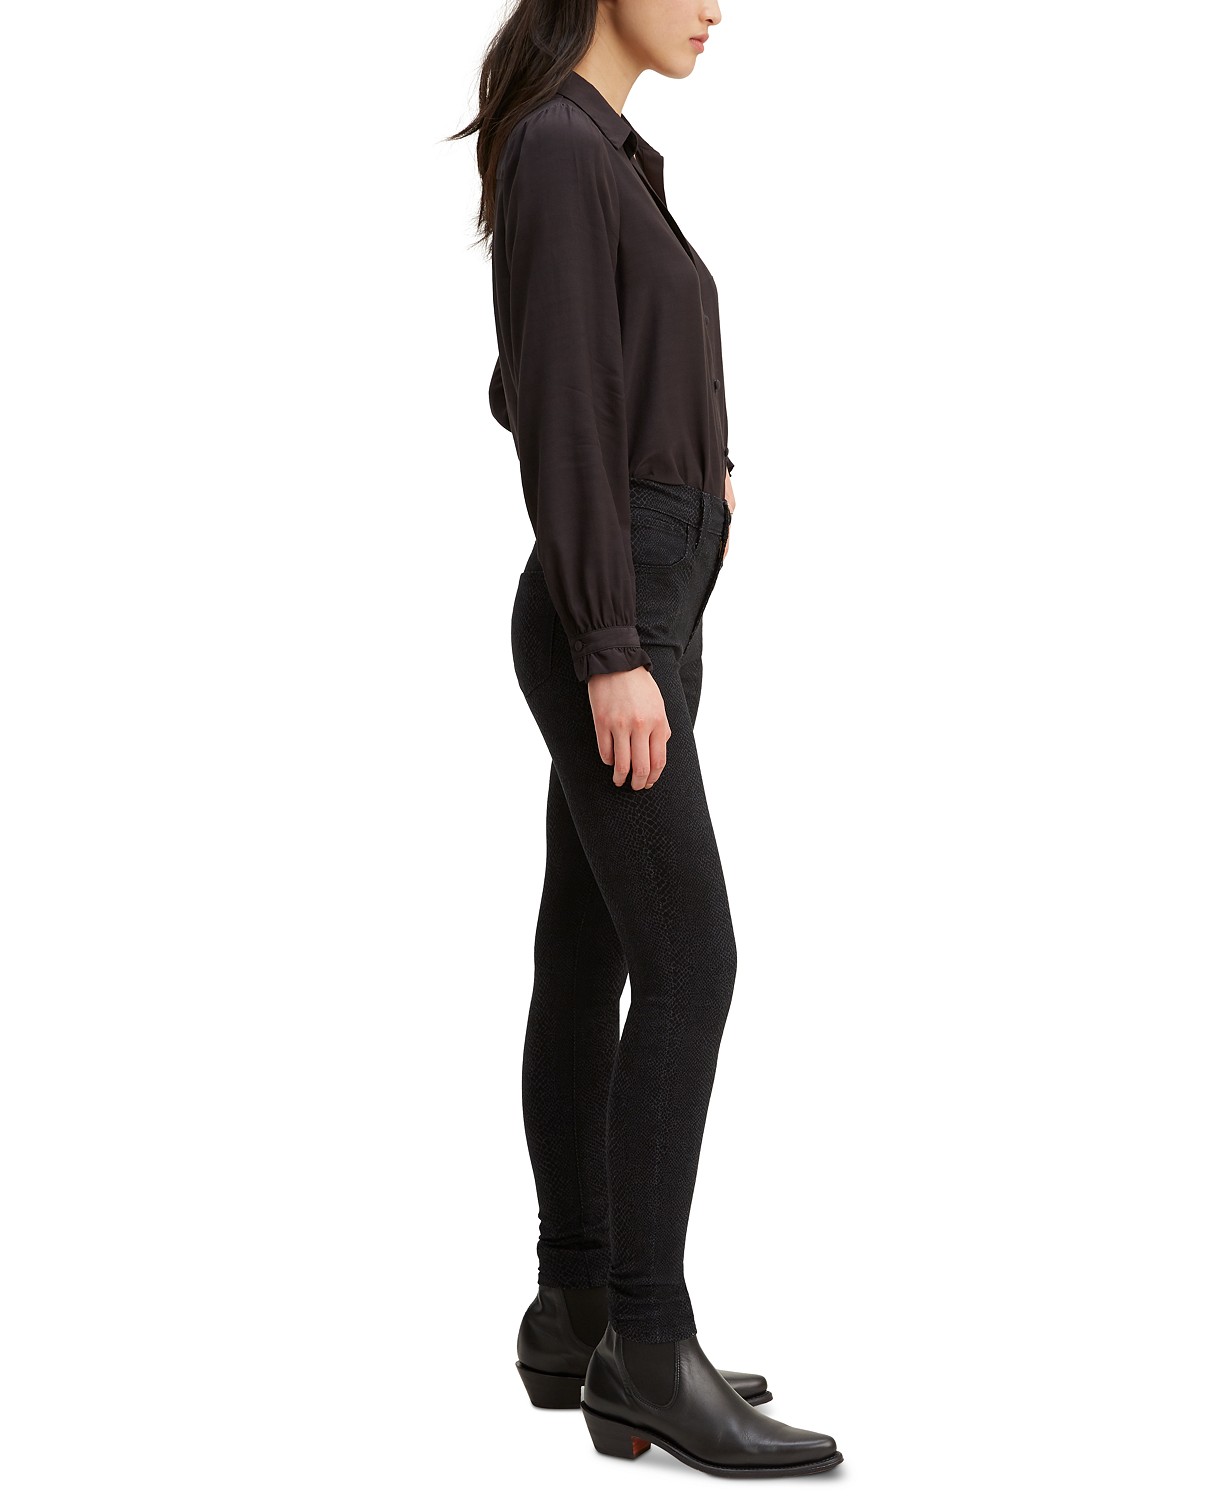 Levi's Women's 720 Python-Print High-Rise Super Skinny Jeans Black Size 26X30